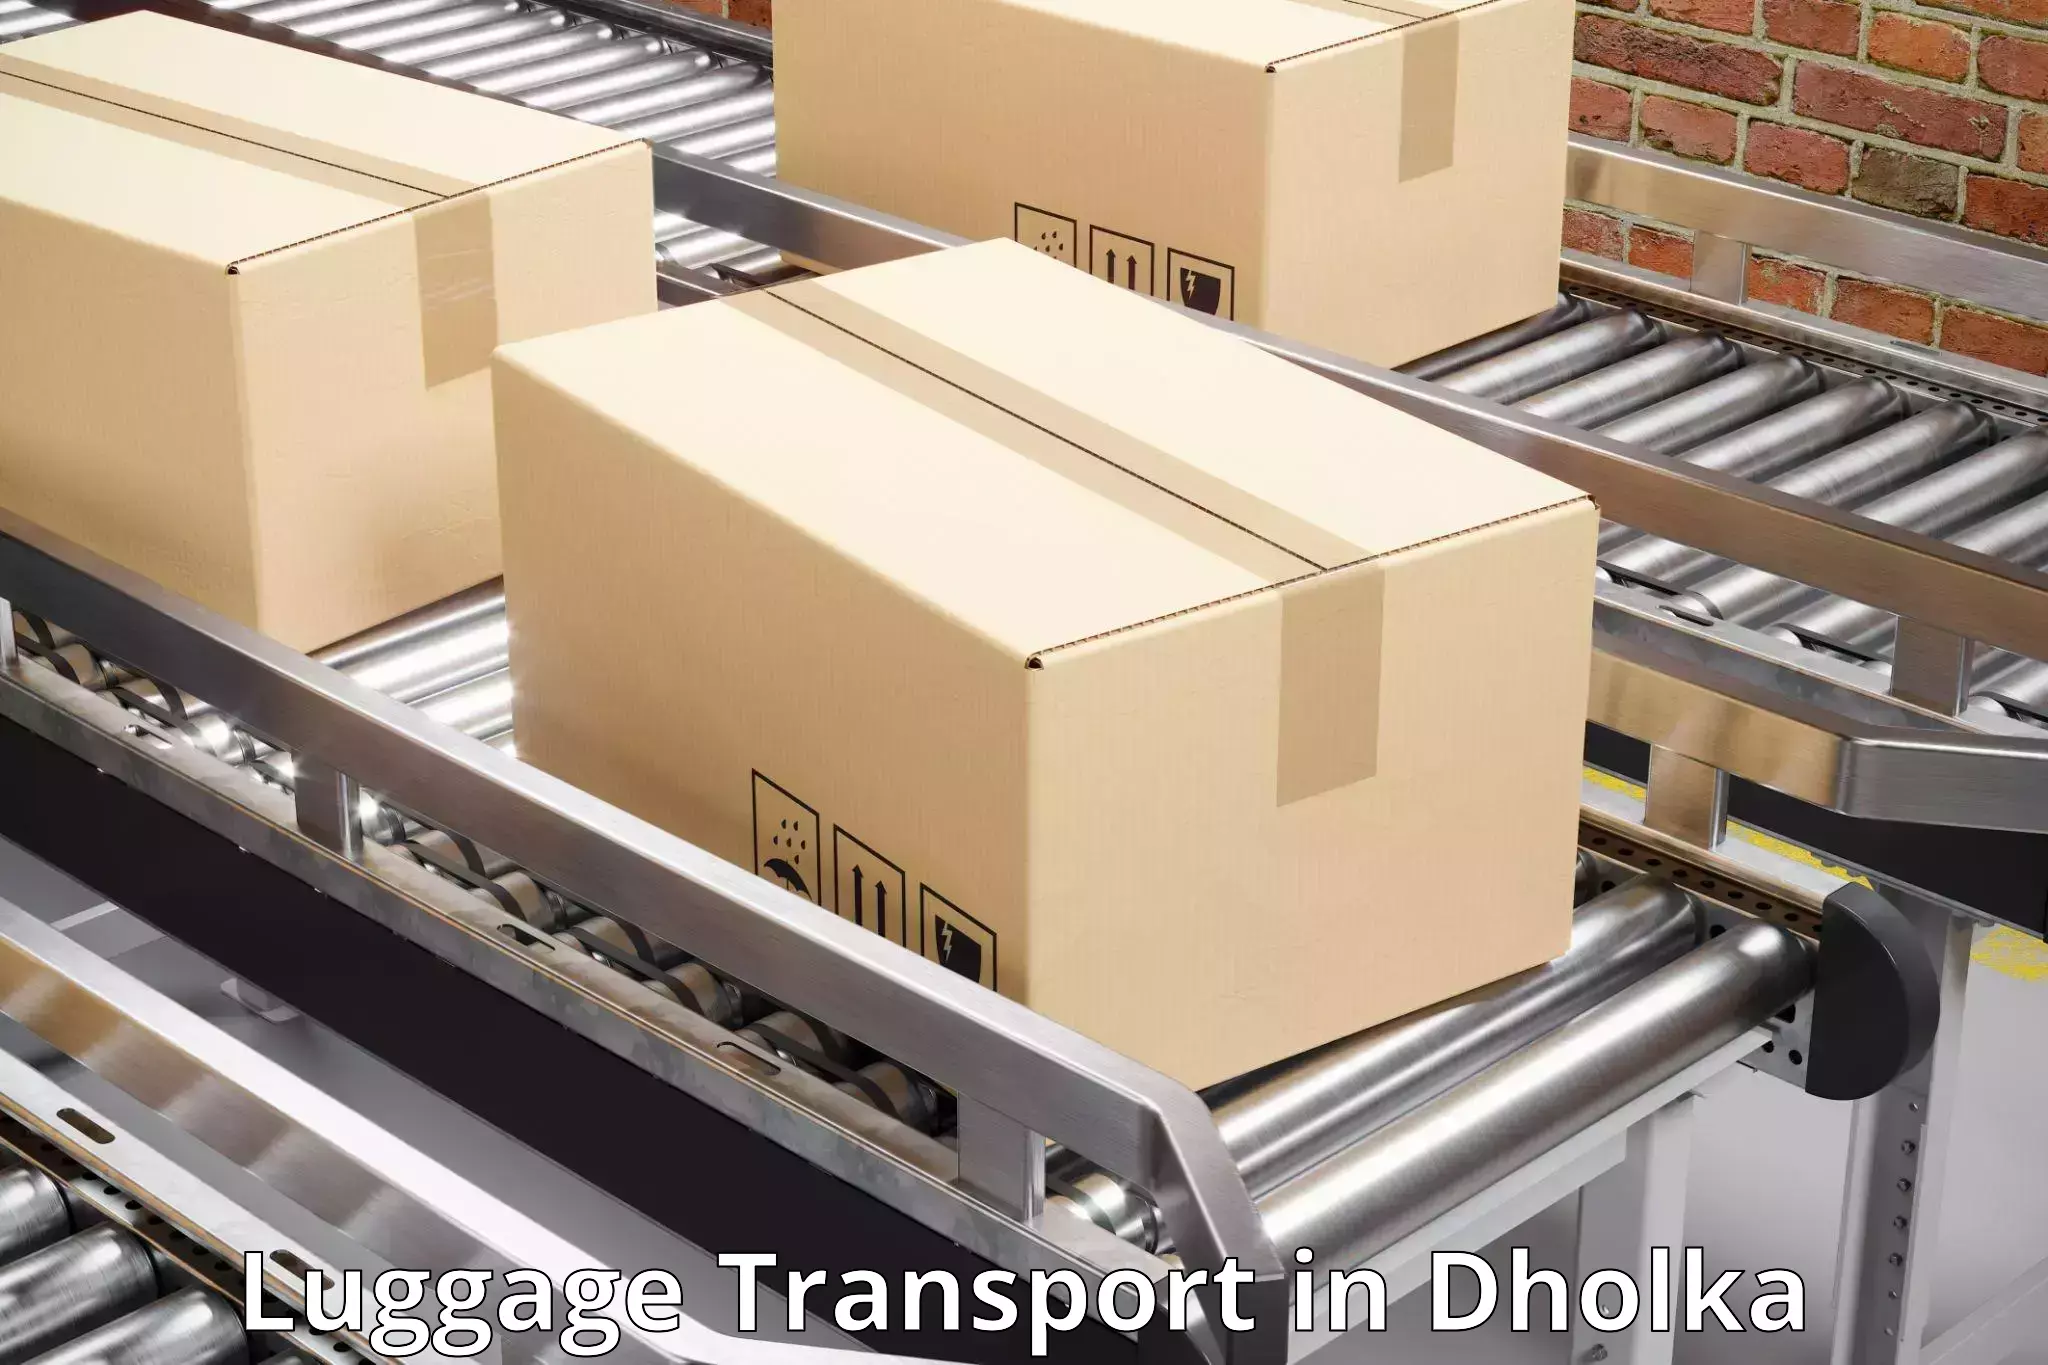 Baggage delivery estimate in Dholka